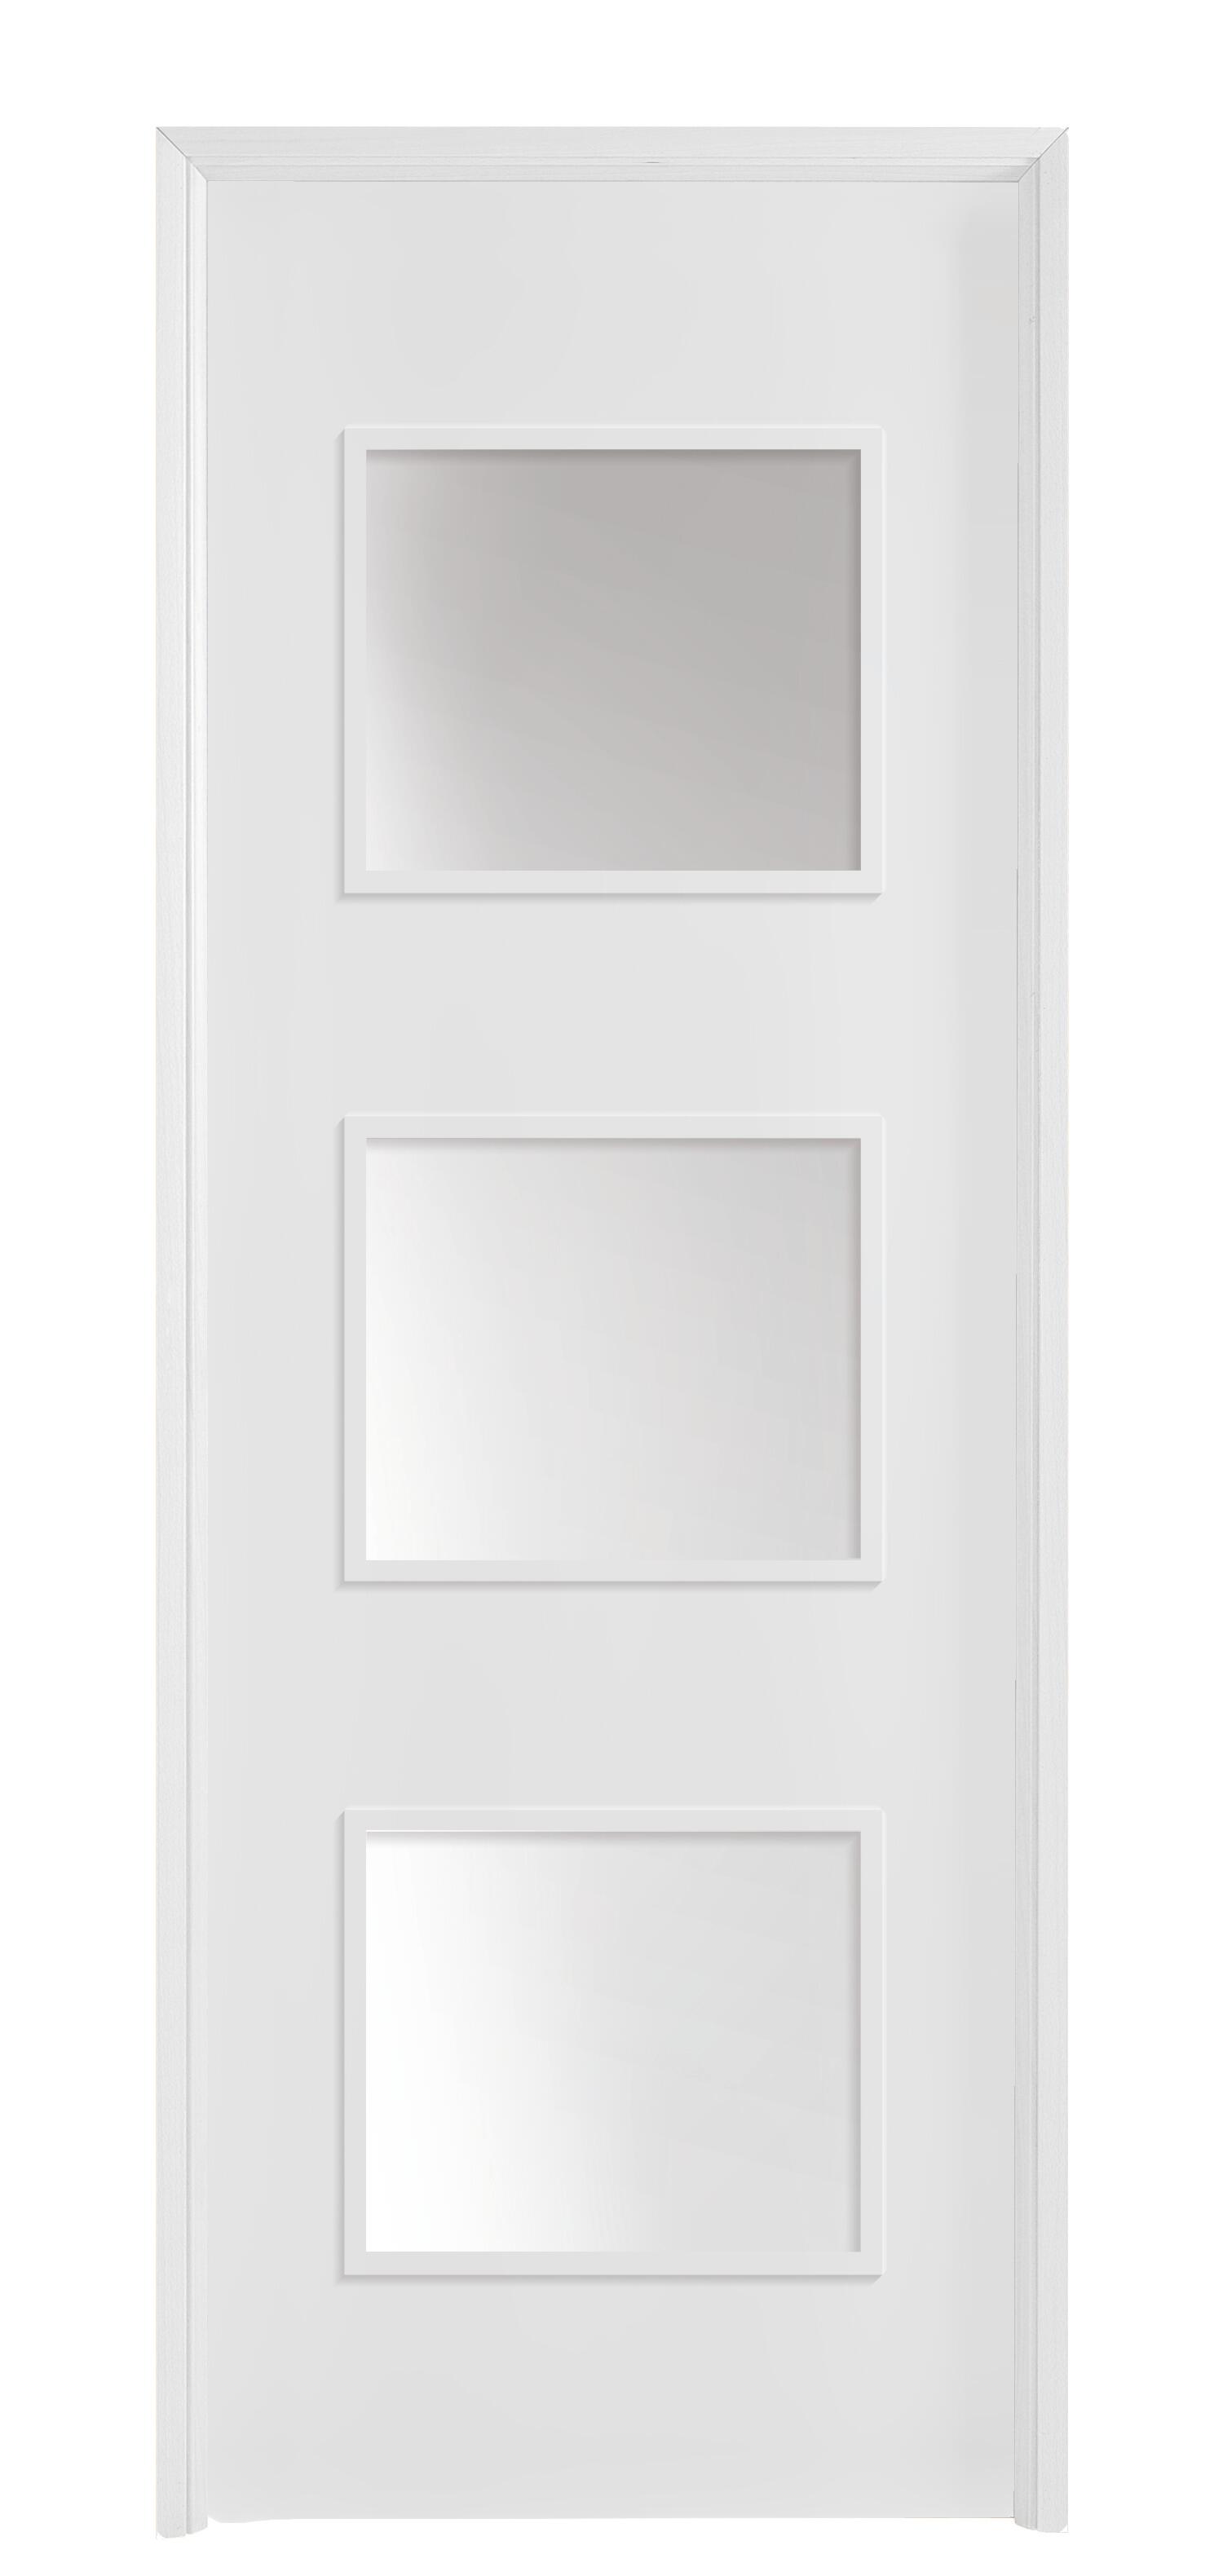 Puerta con cristal bari plus blanca 7x2x82,5 cm d